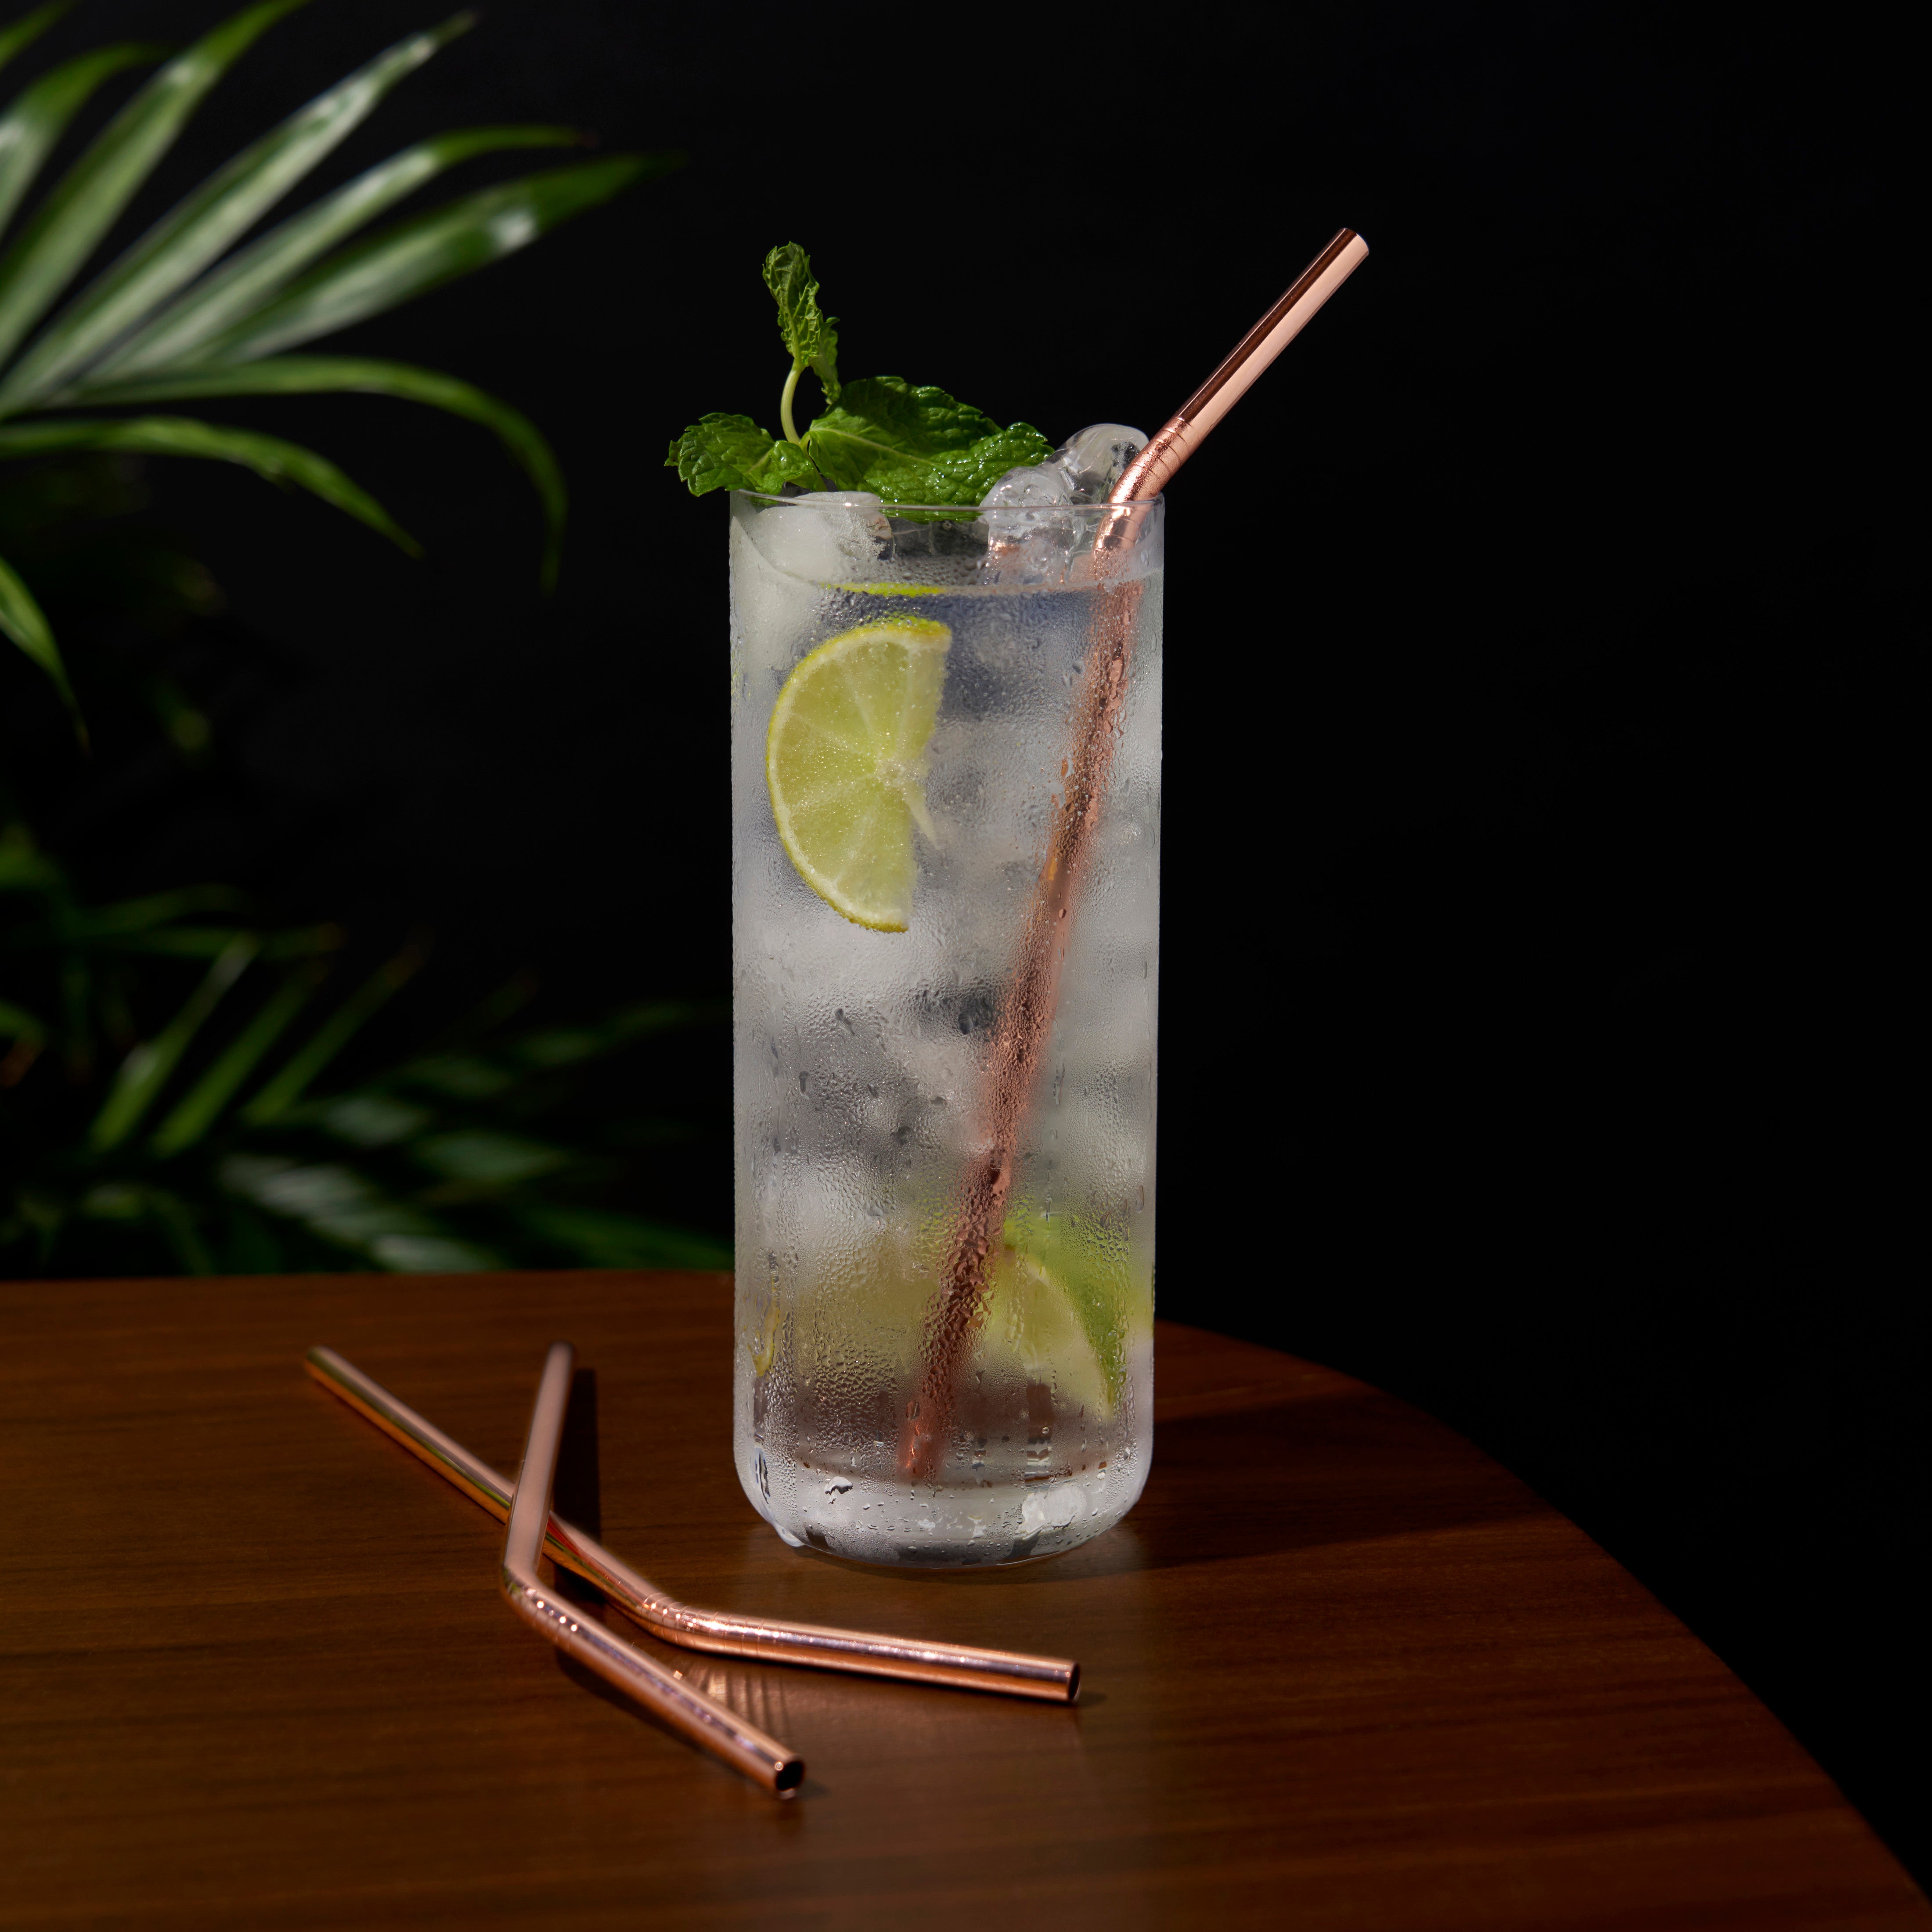 Viski Stainless Cocktail Straws - Reusable Copper Straws - Eco